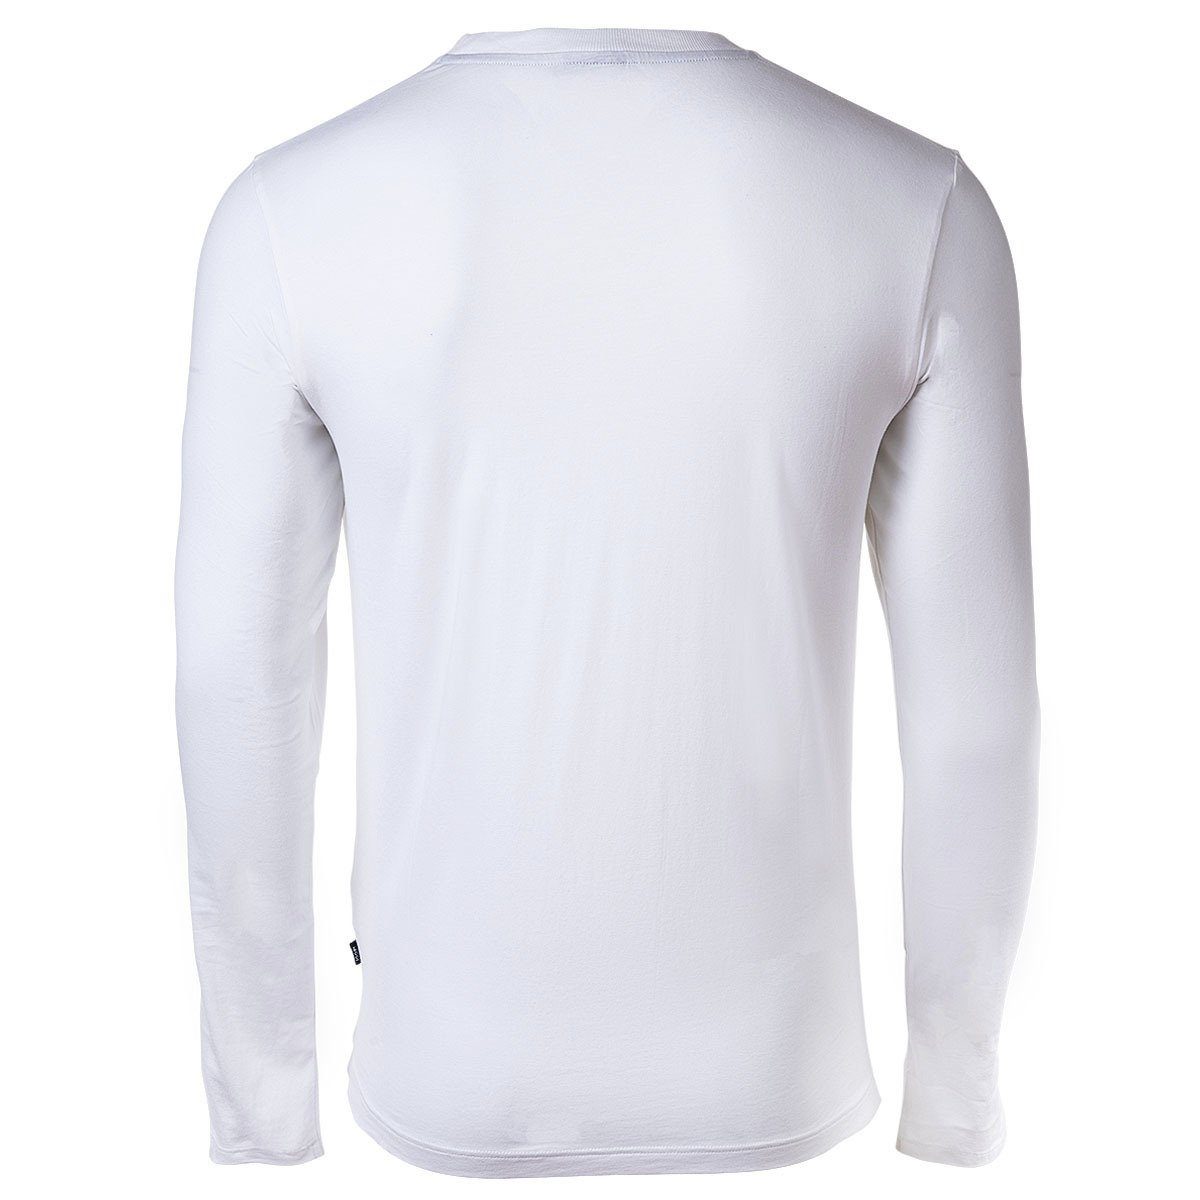 Joop! T-Shirt Weiß Herren Langarm-Shirt Loungewear, Rundhals 